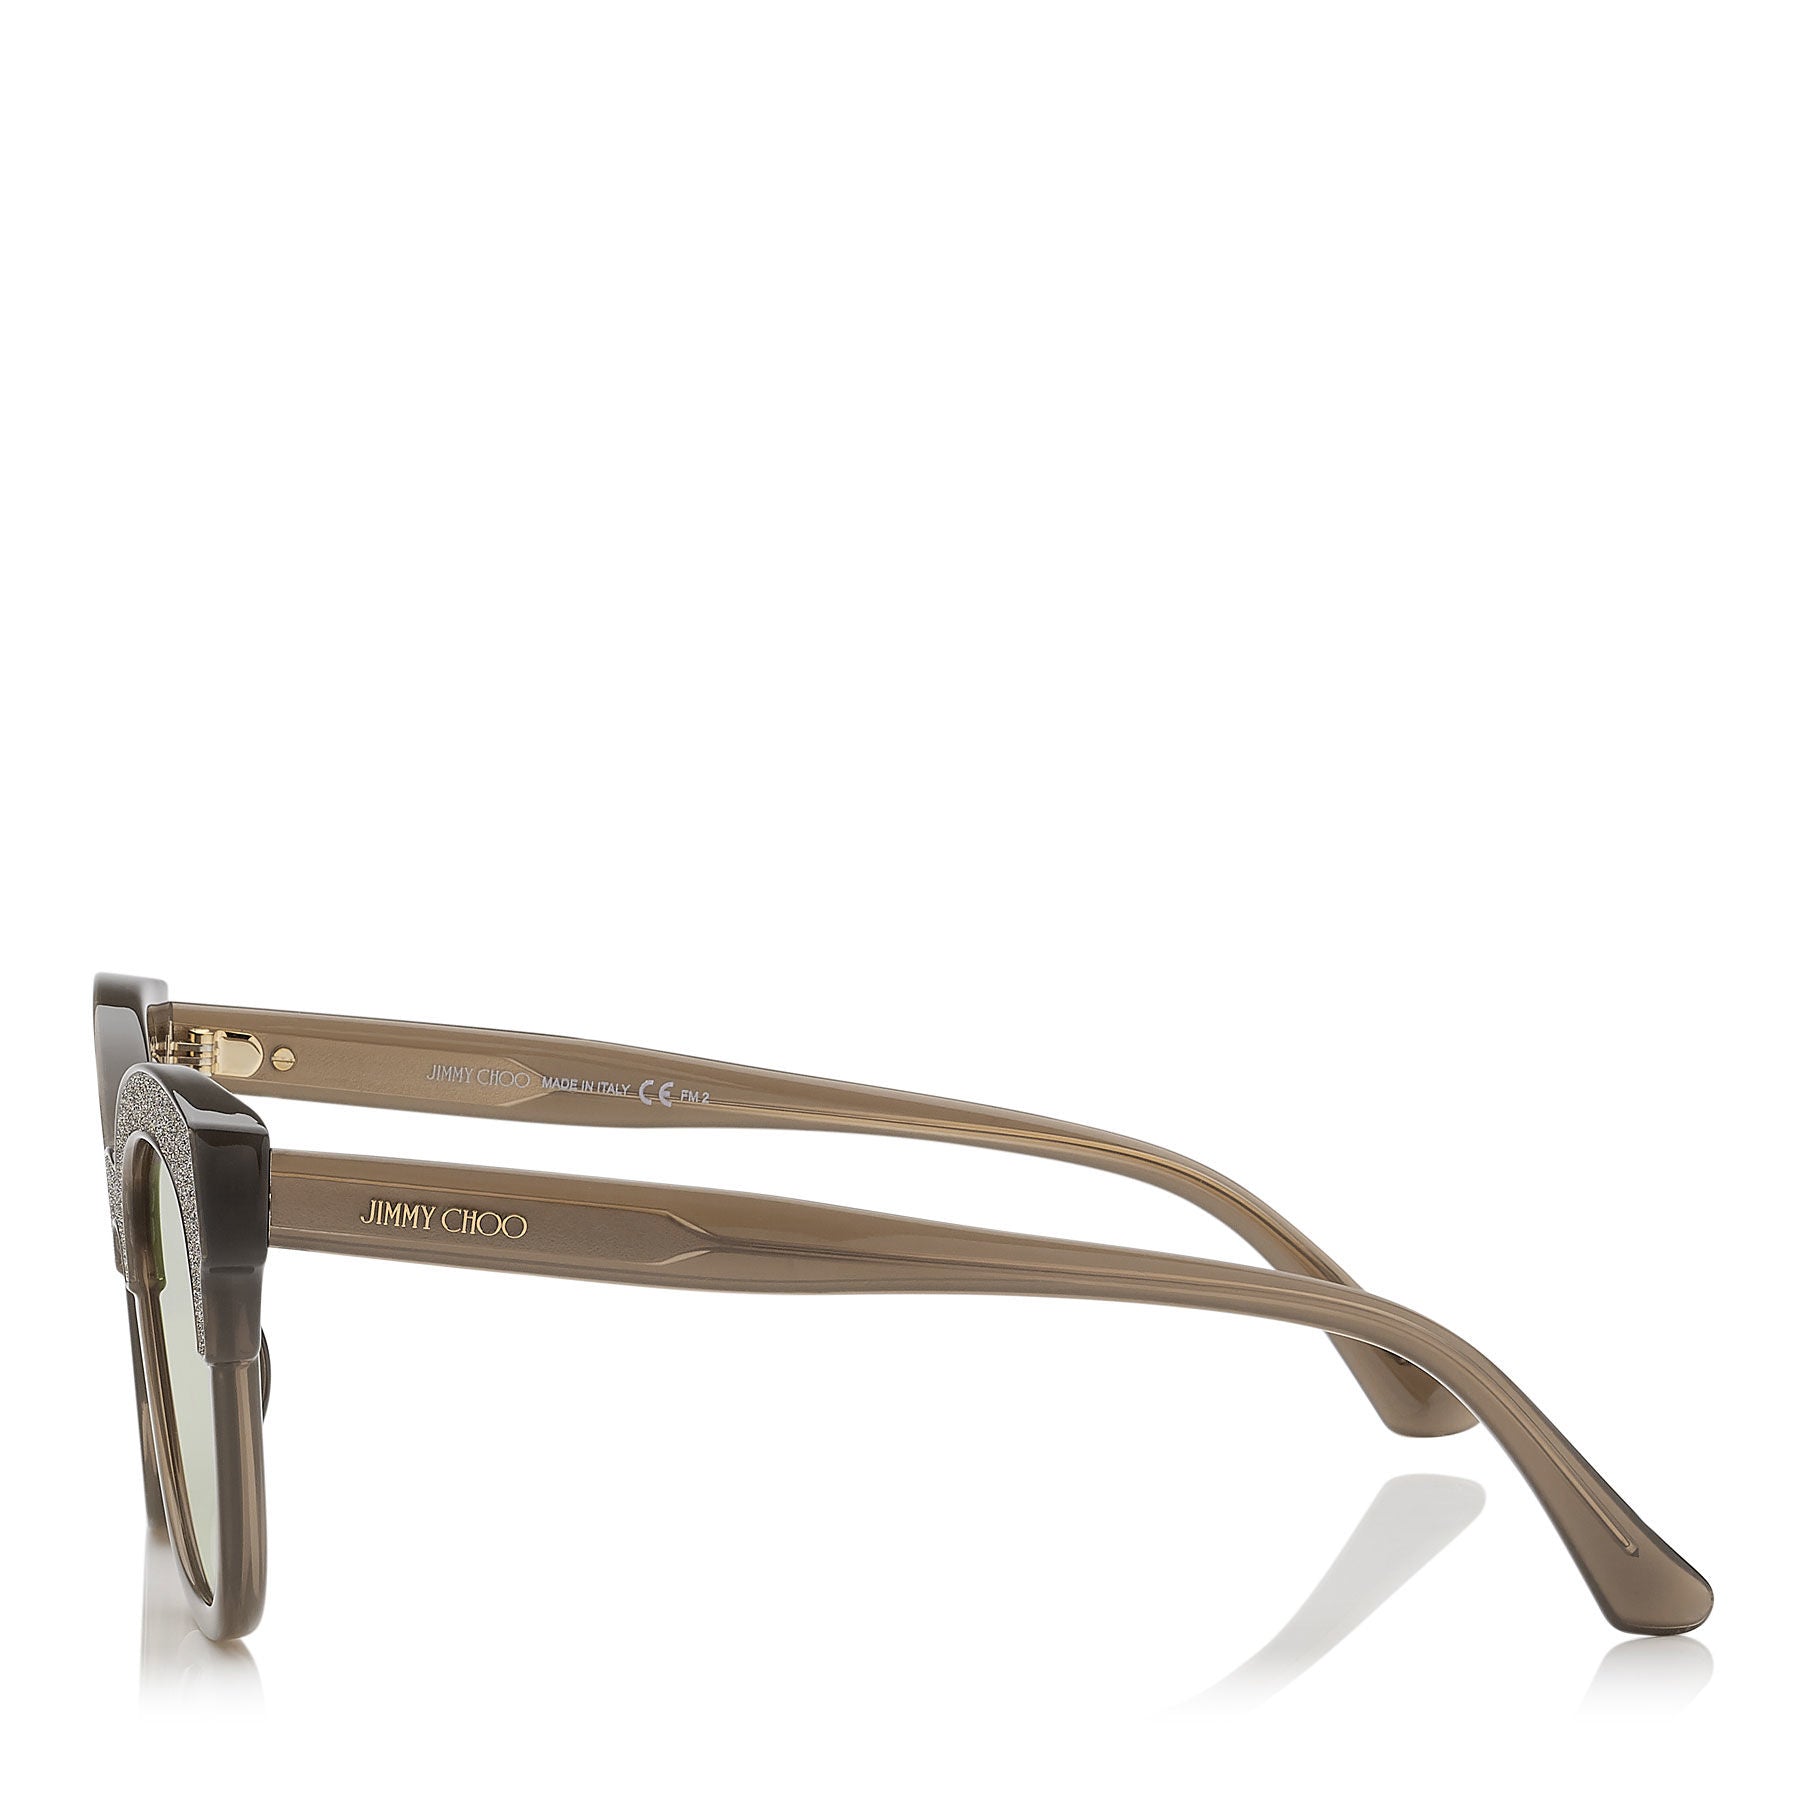 JIMMY CHOO  Mayela Mud Cat-Eye Sunglasses with Mud Crystal Fabric ITEM NO. MAYELAS50E19A